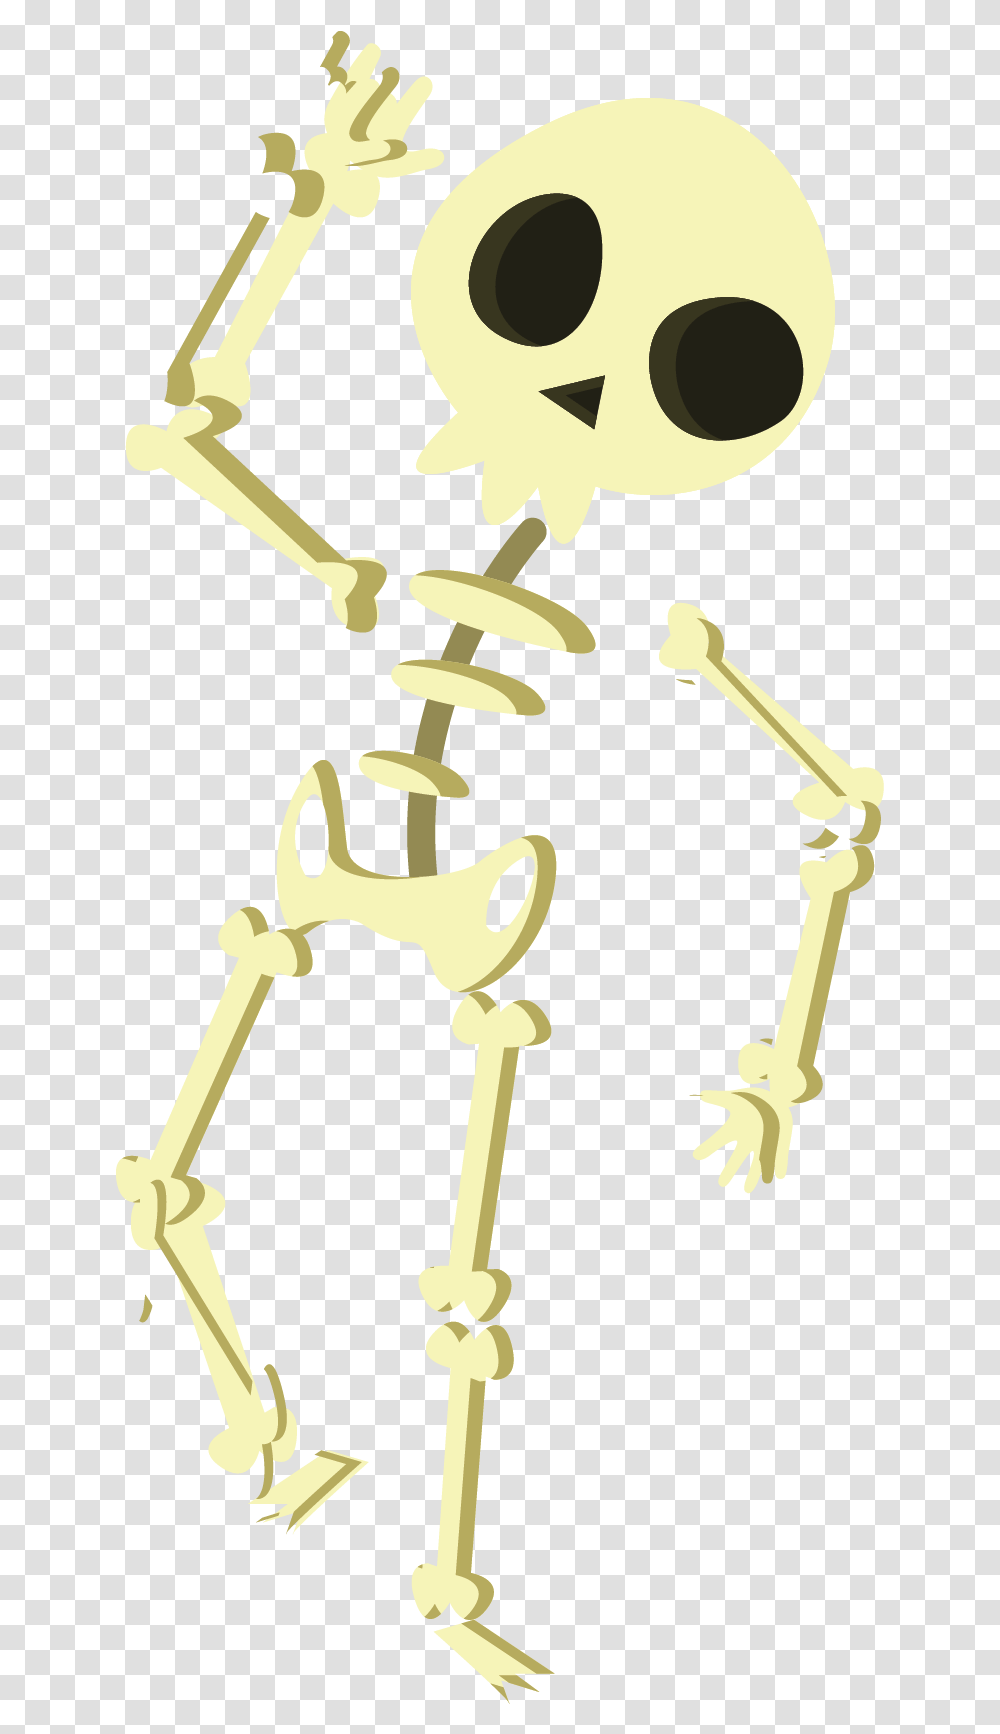 Skeleton Halloween Skull Silhouette Dot, Utility Pole, Key, Rattle, Cutlery Transparent Png